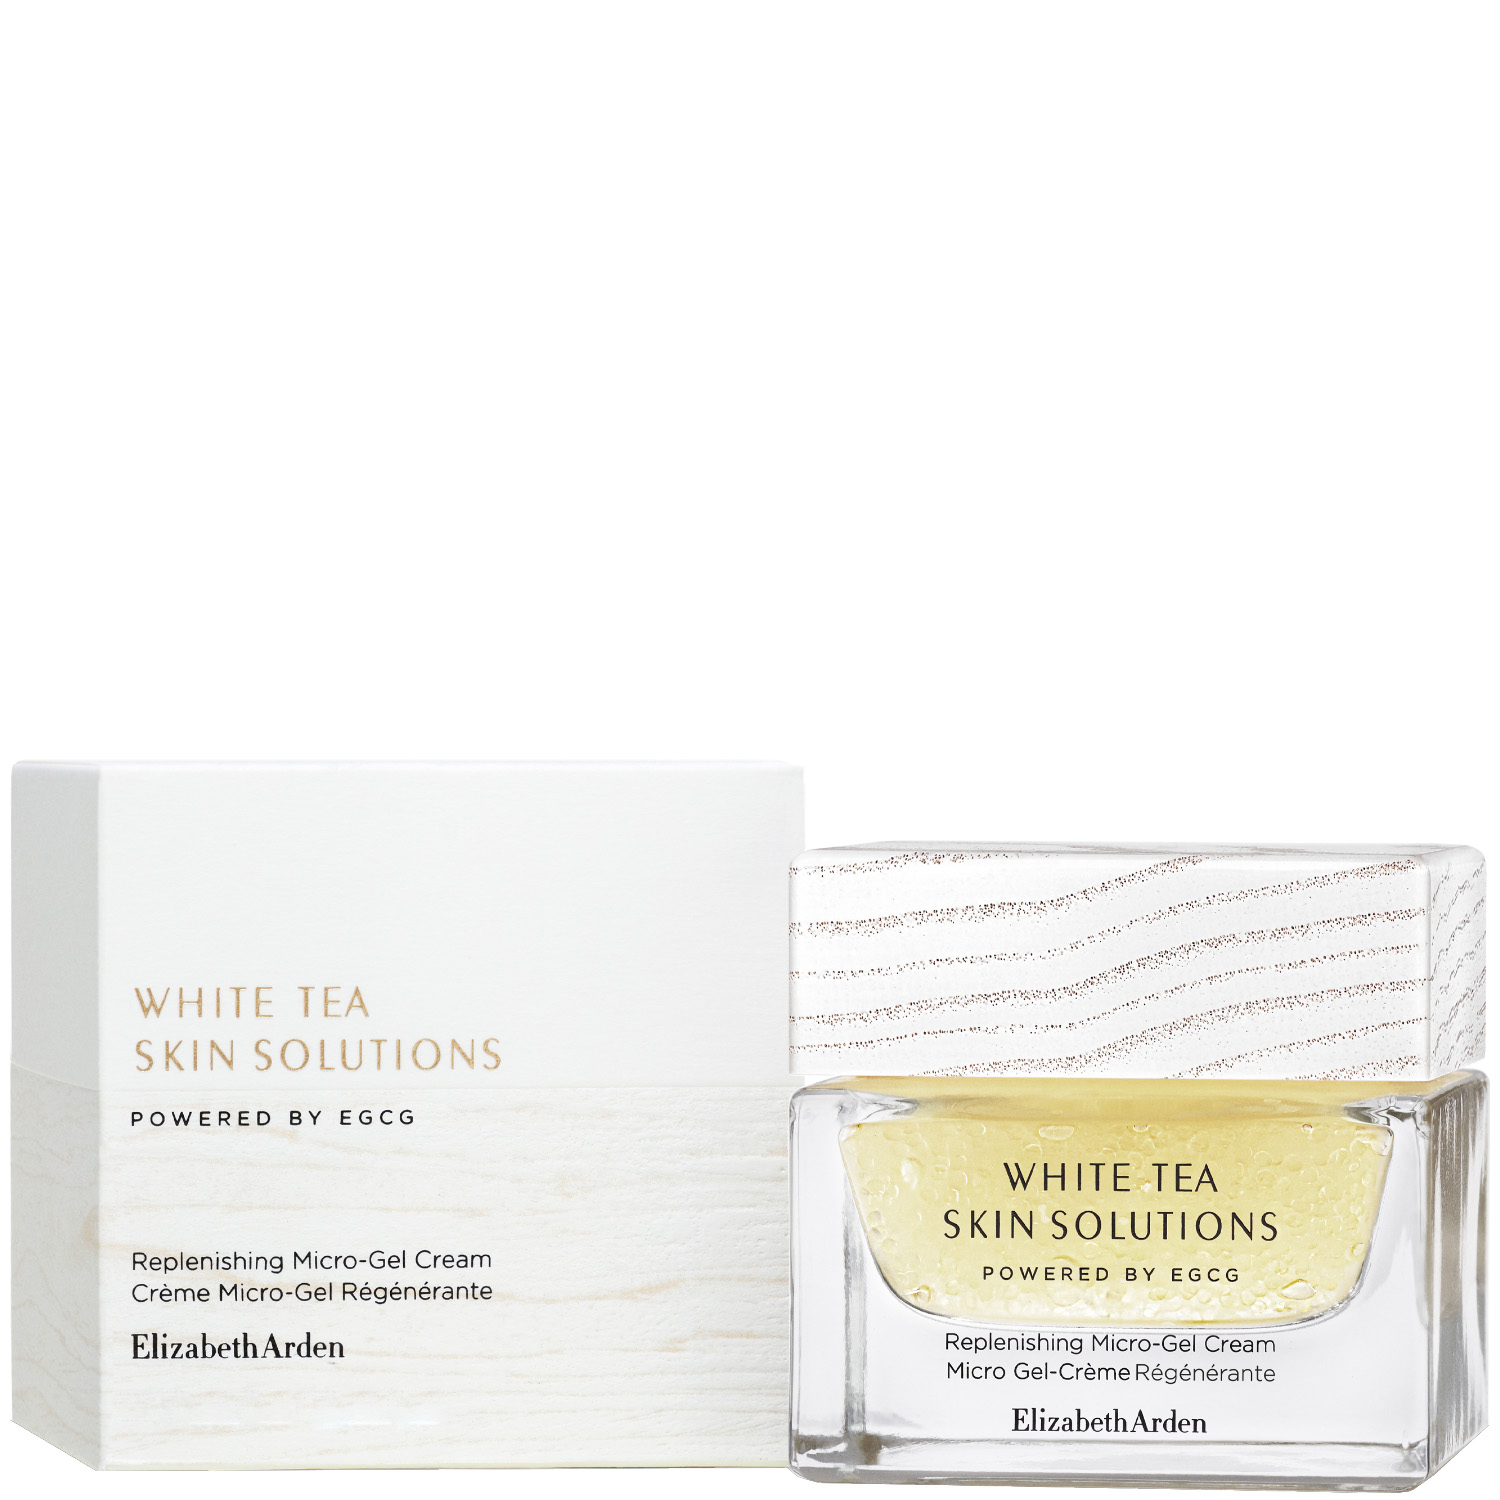 Elizabeth Arden White Tea Skin Solutions Replenishing Micro-Gel Cream 50ml